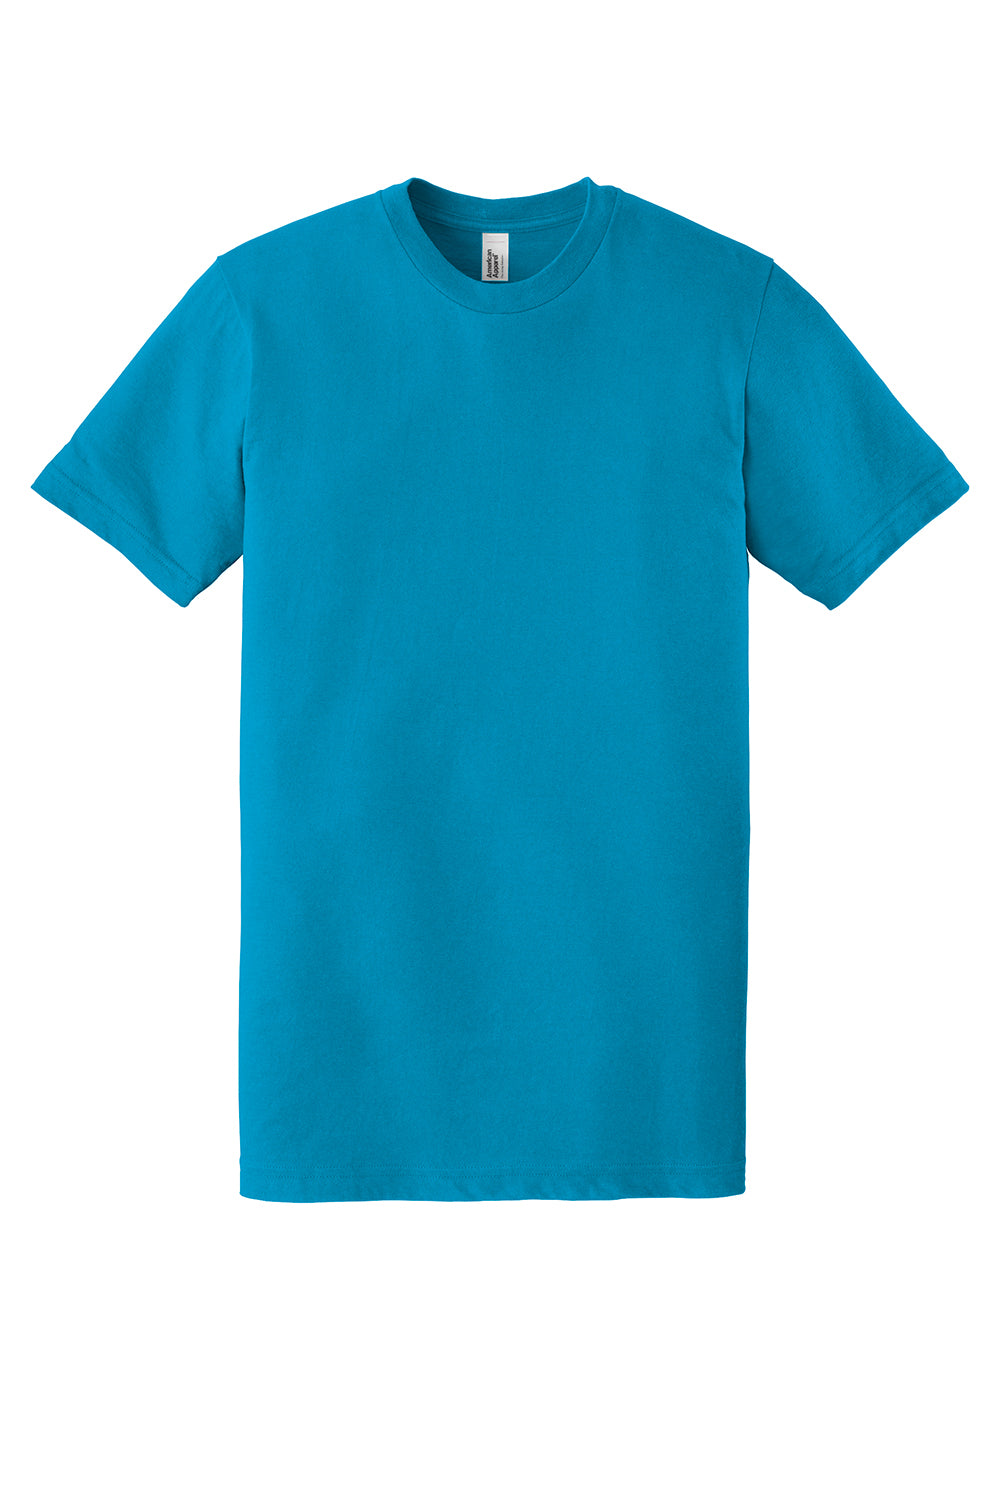 American Apparel 2001 Mens Fine Jersey Short Sleeve Crewneck T-Shirt Teal Blue Flat Front